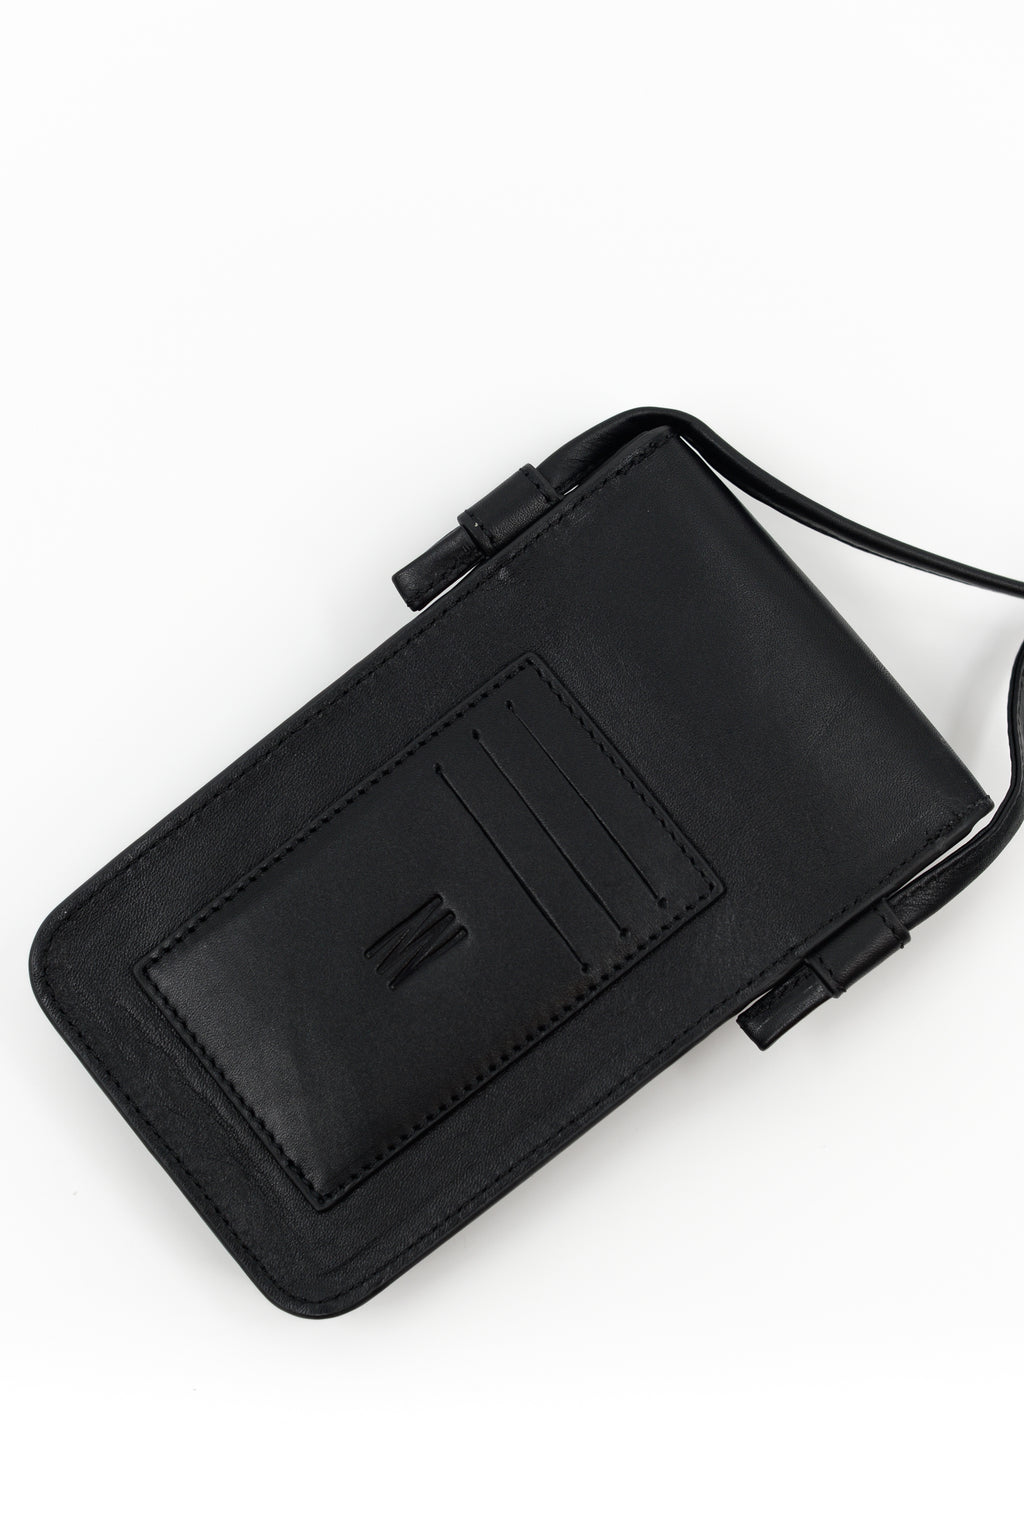 Smartphone bag in black nappa leather